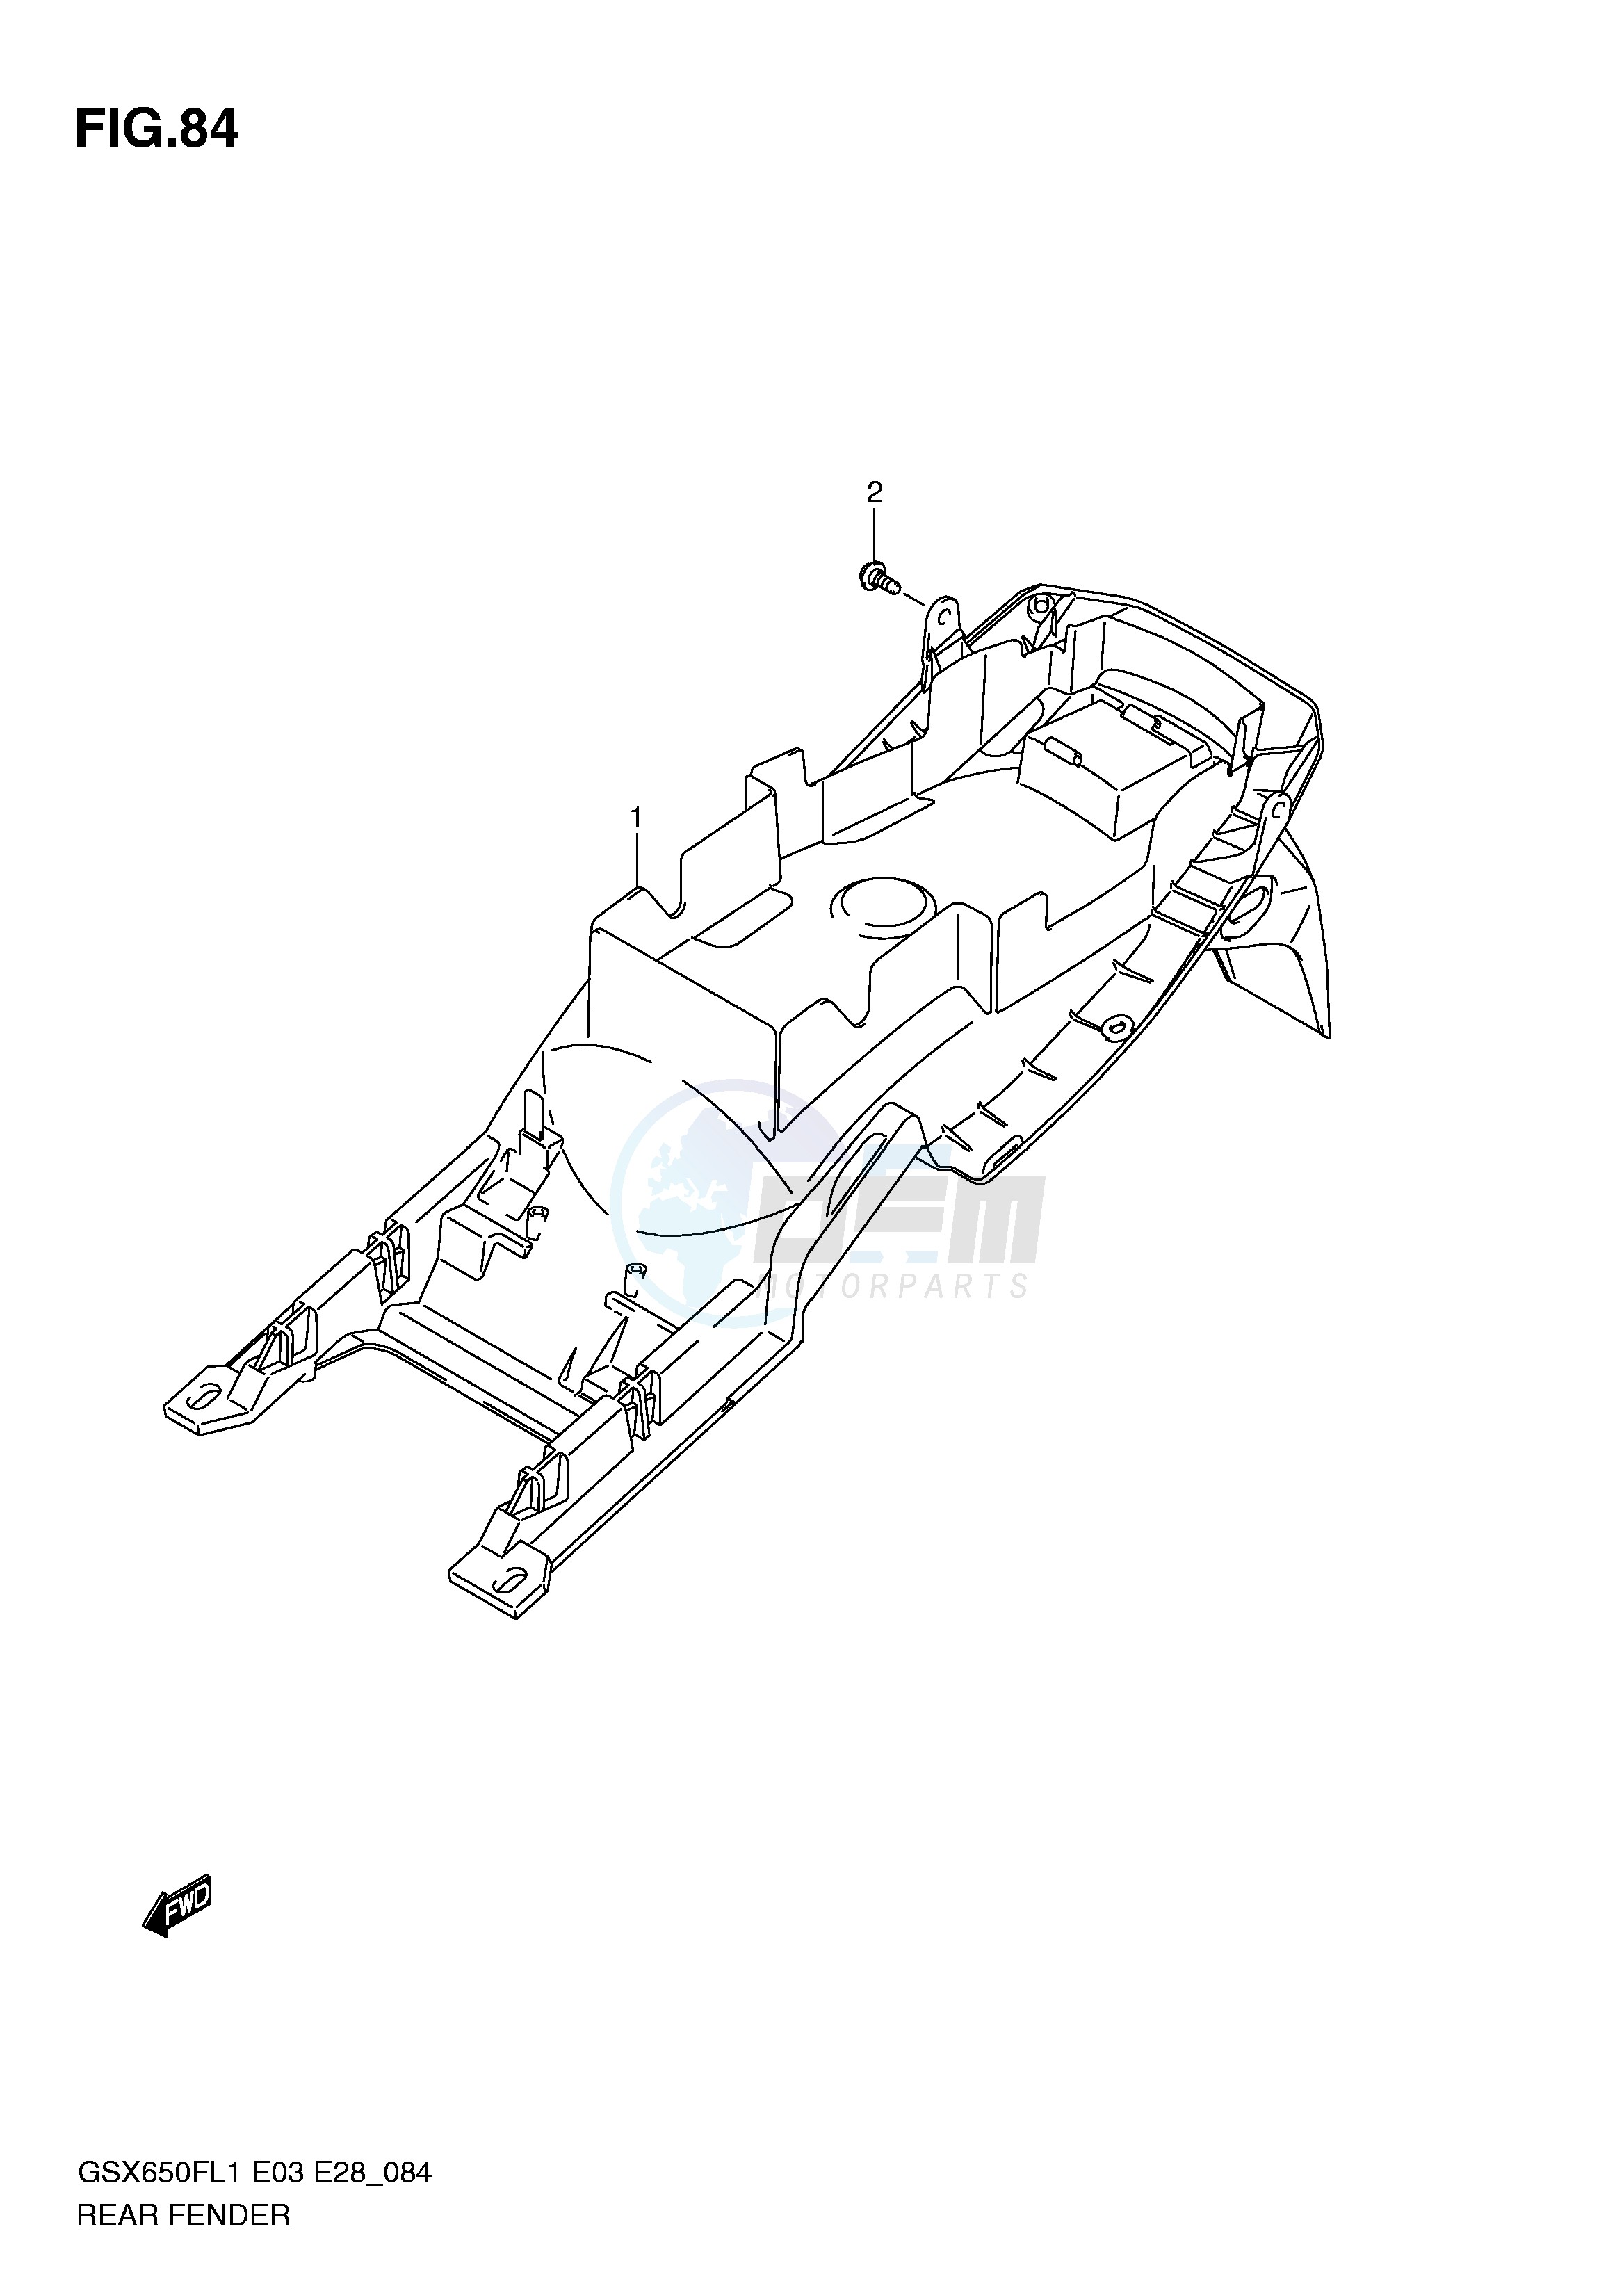 REAR FENDER (GSX650FAL1 E28) blueprint